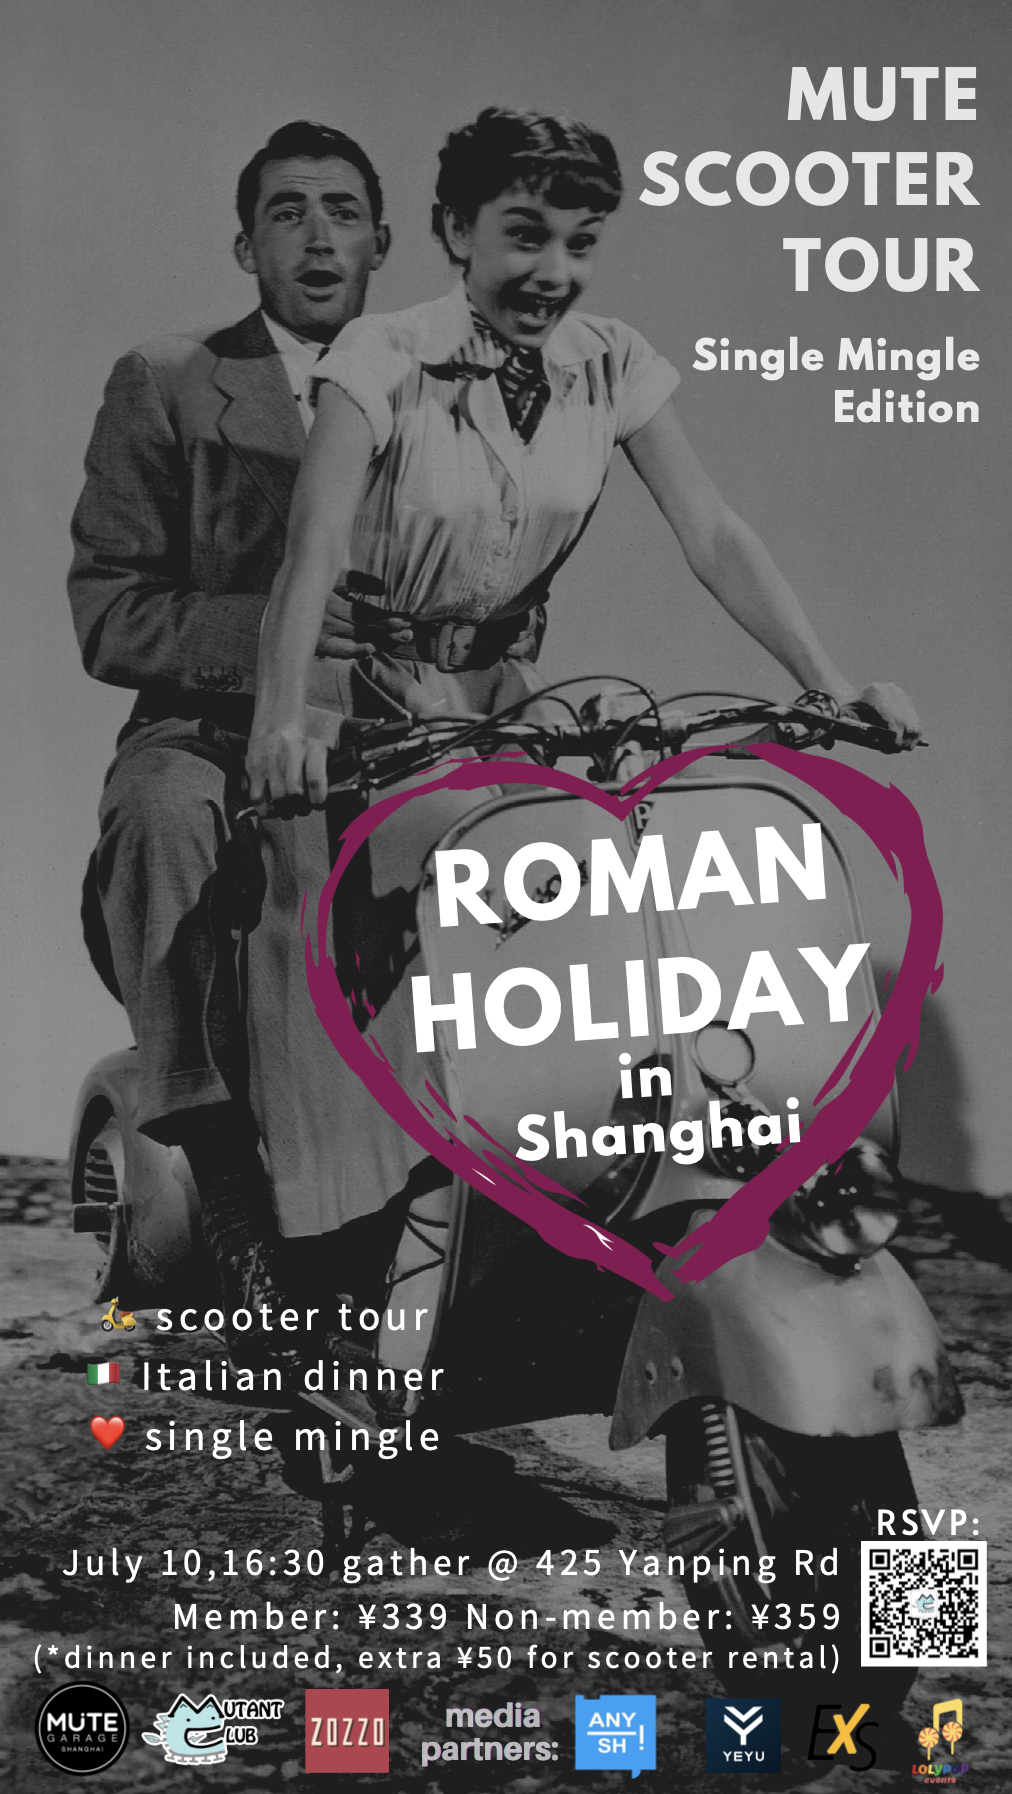 Roman holiday in Shanghai